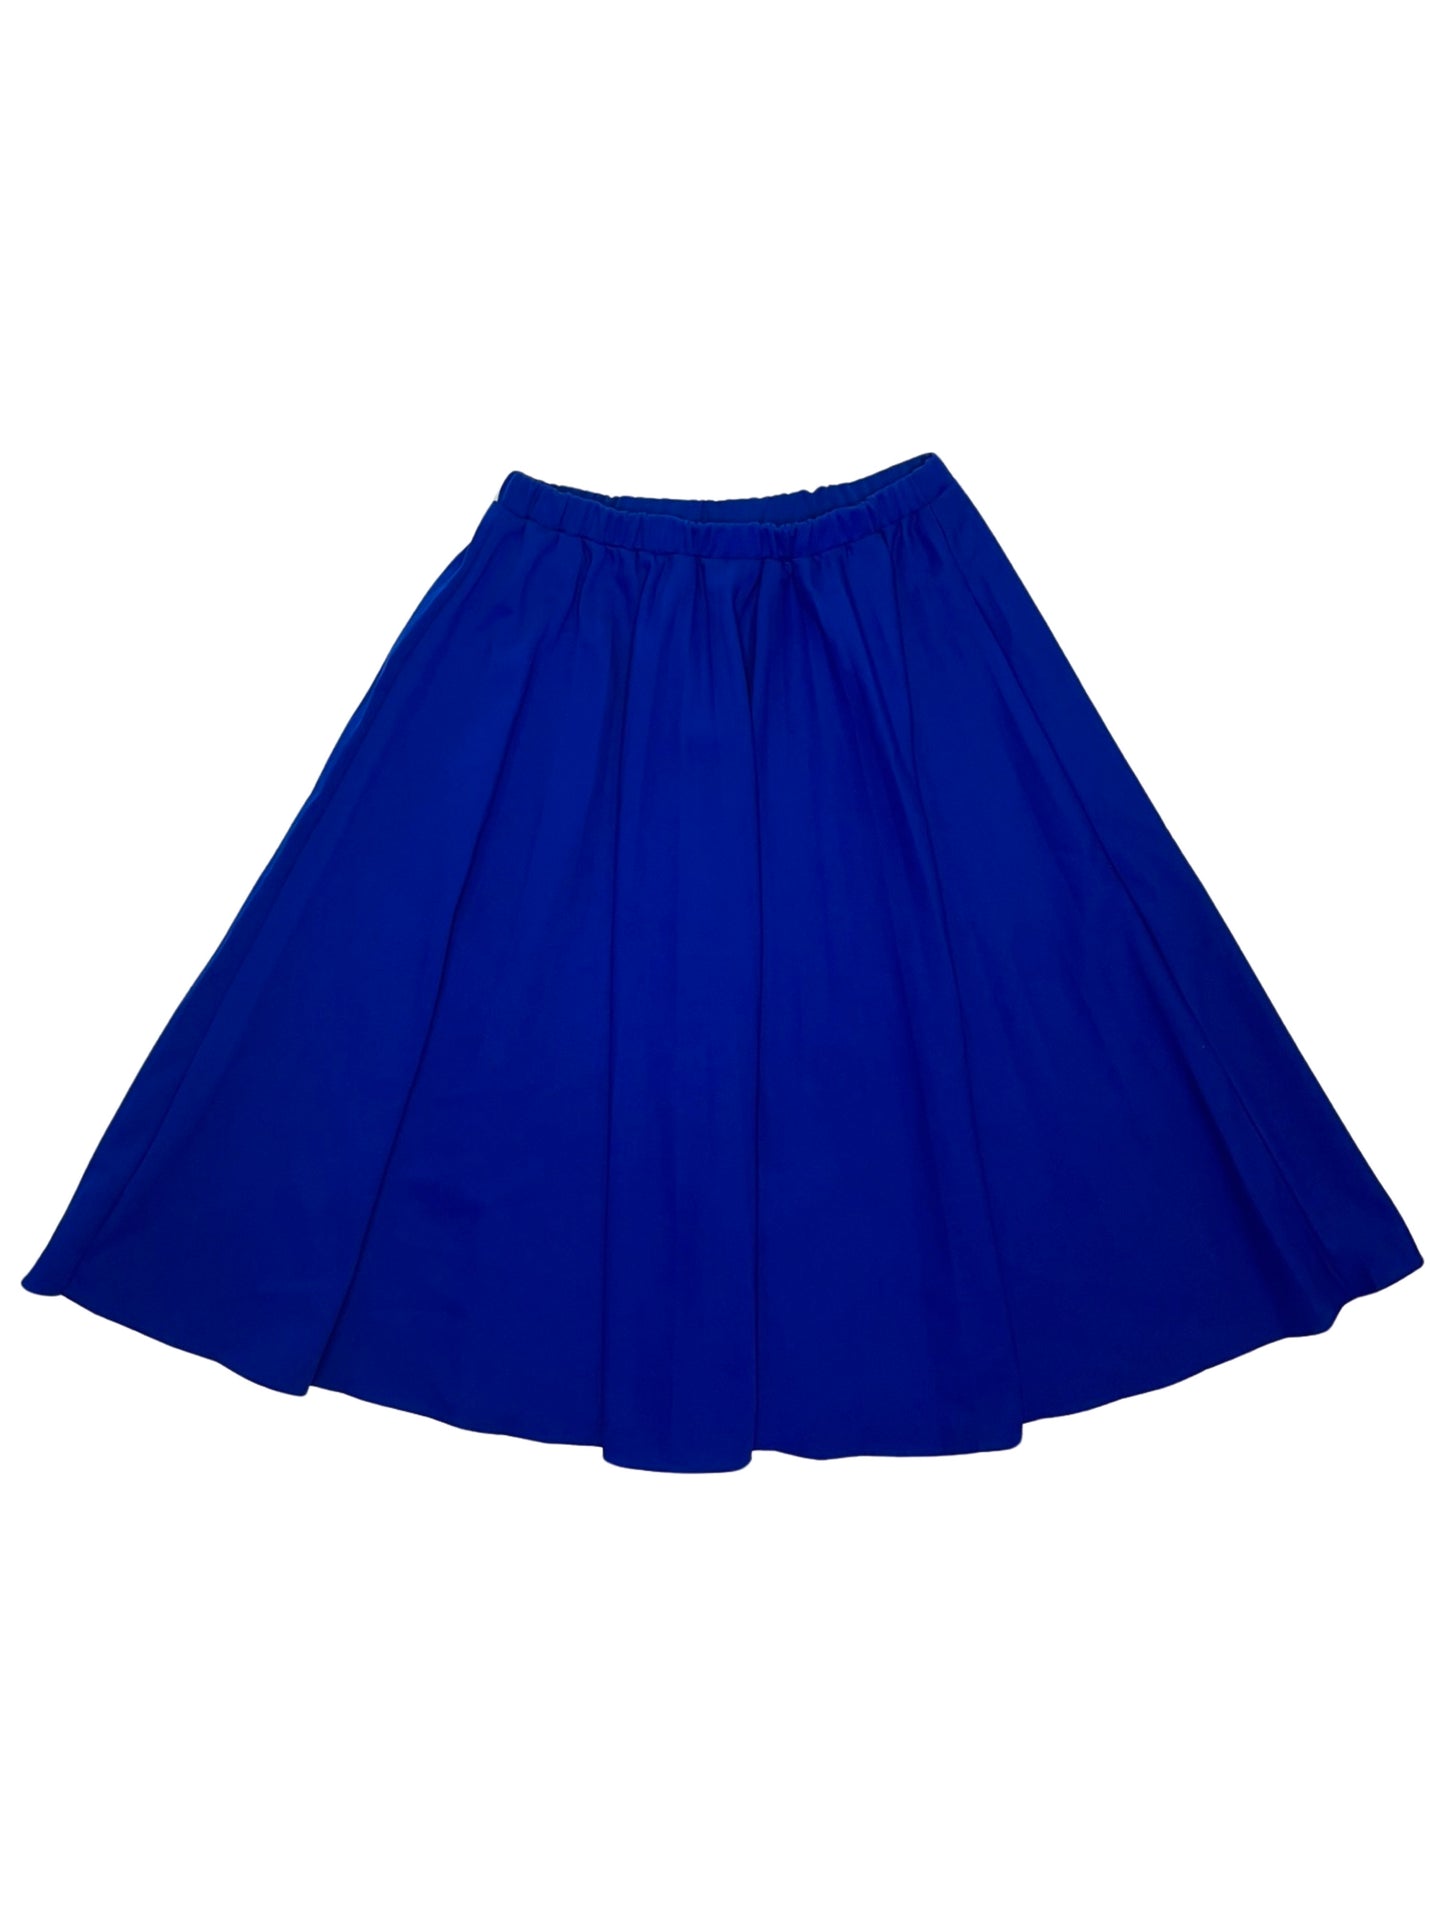 Cobalt Blue Pleated Skirt